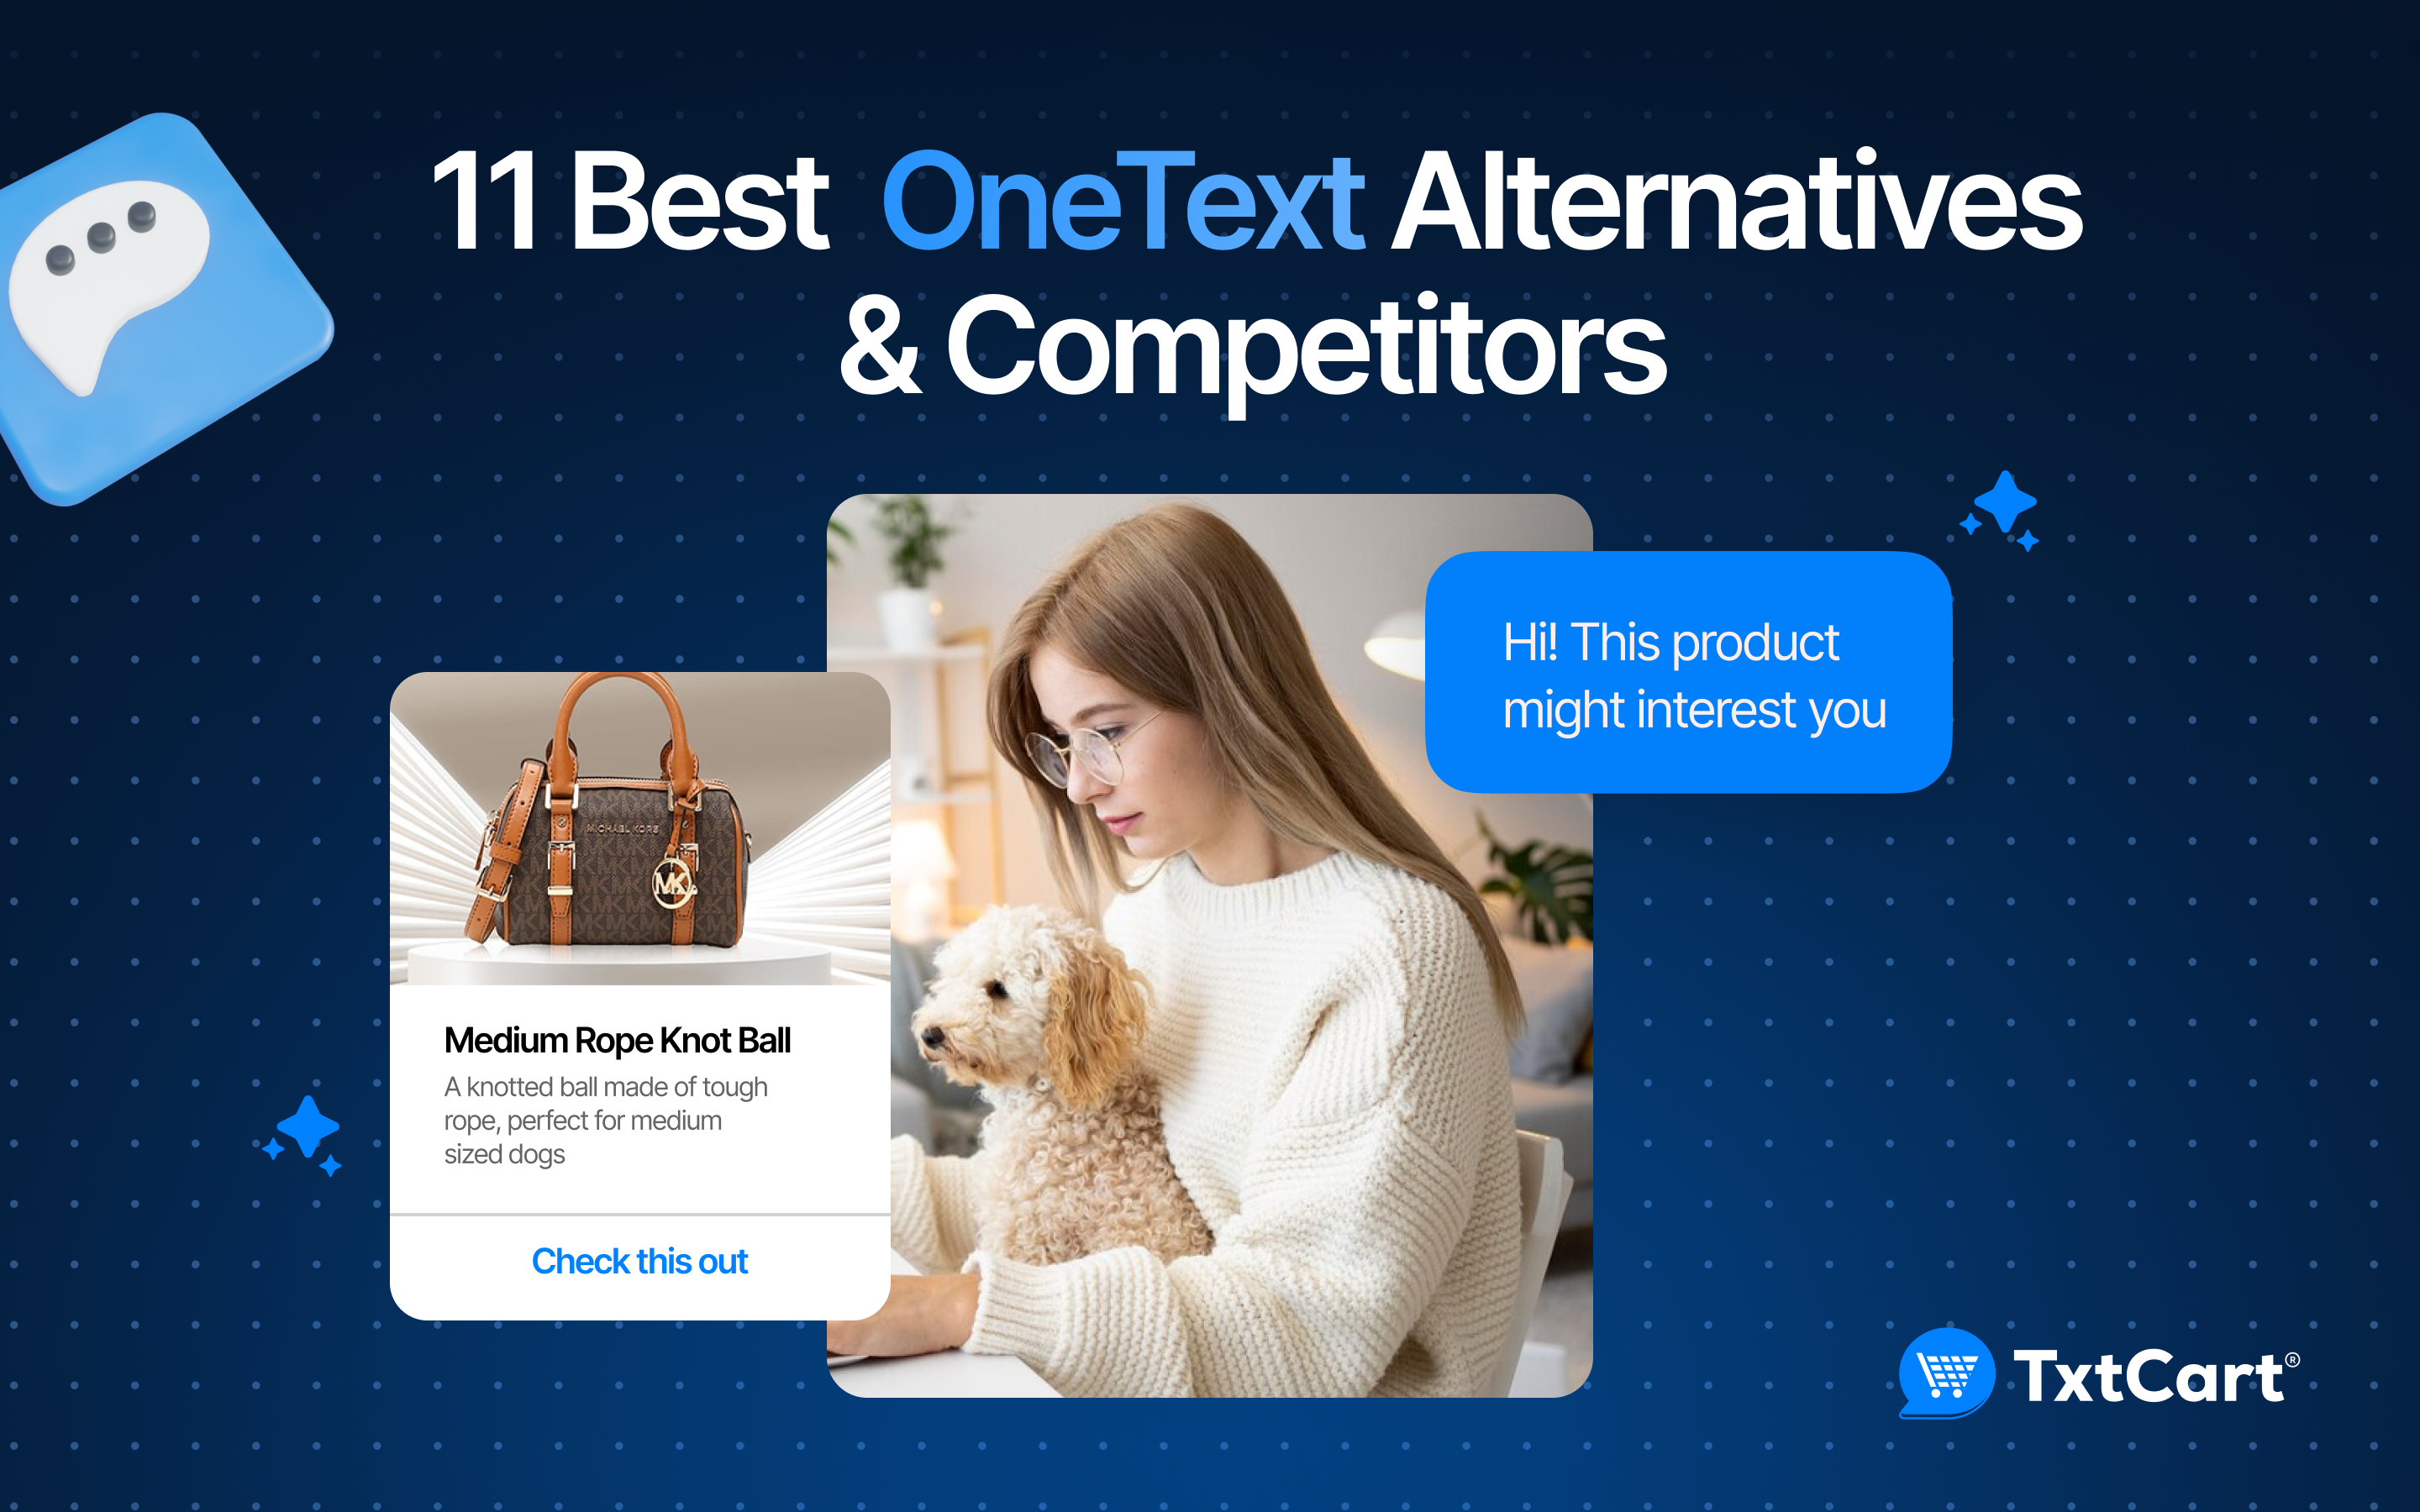 11 Best OneText Alternatives & Competitors